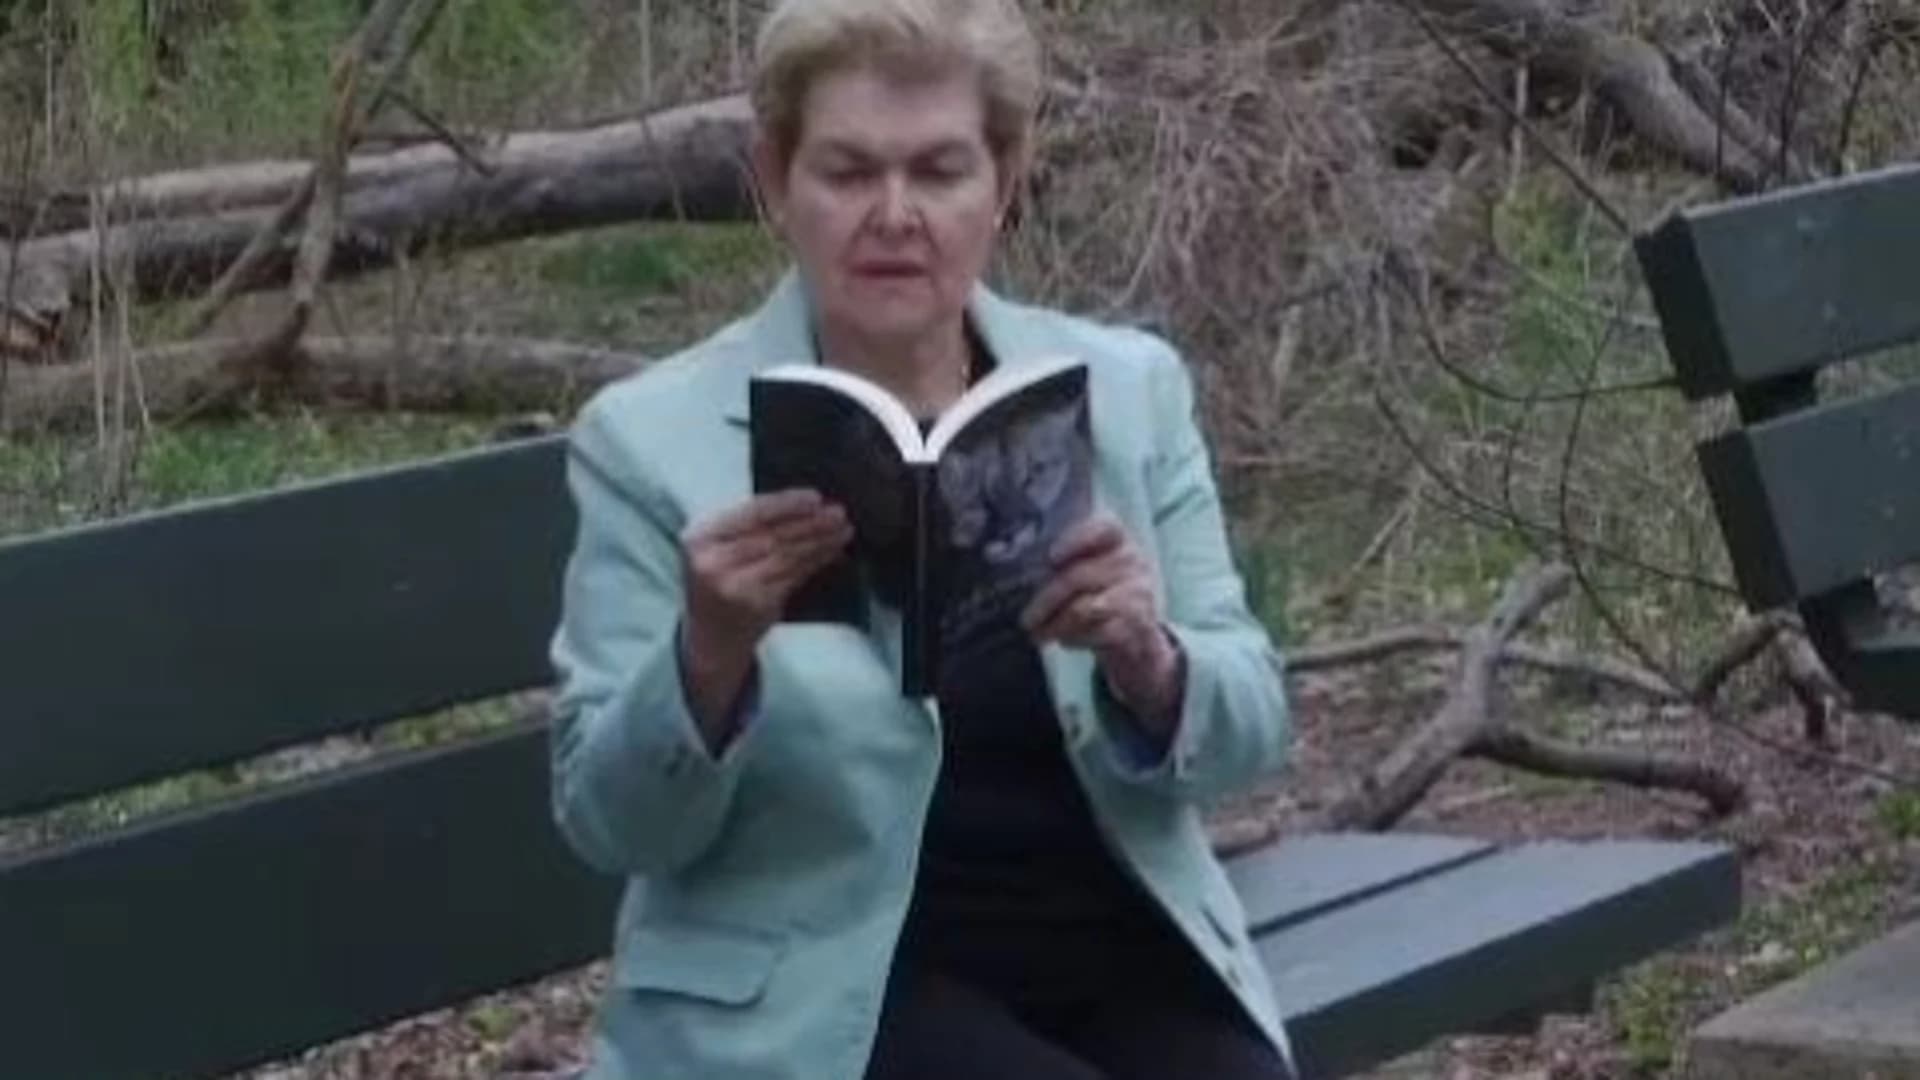 Former Bronx Zoo employee pens inspirational book